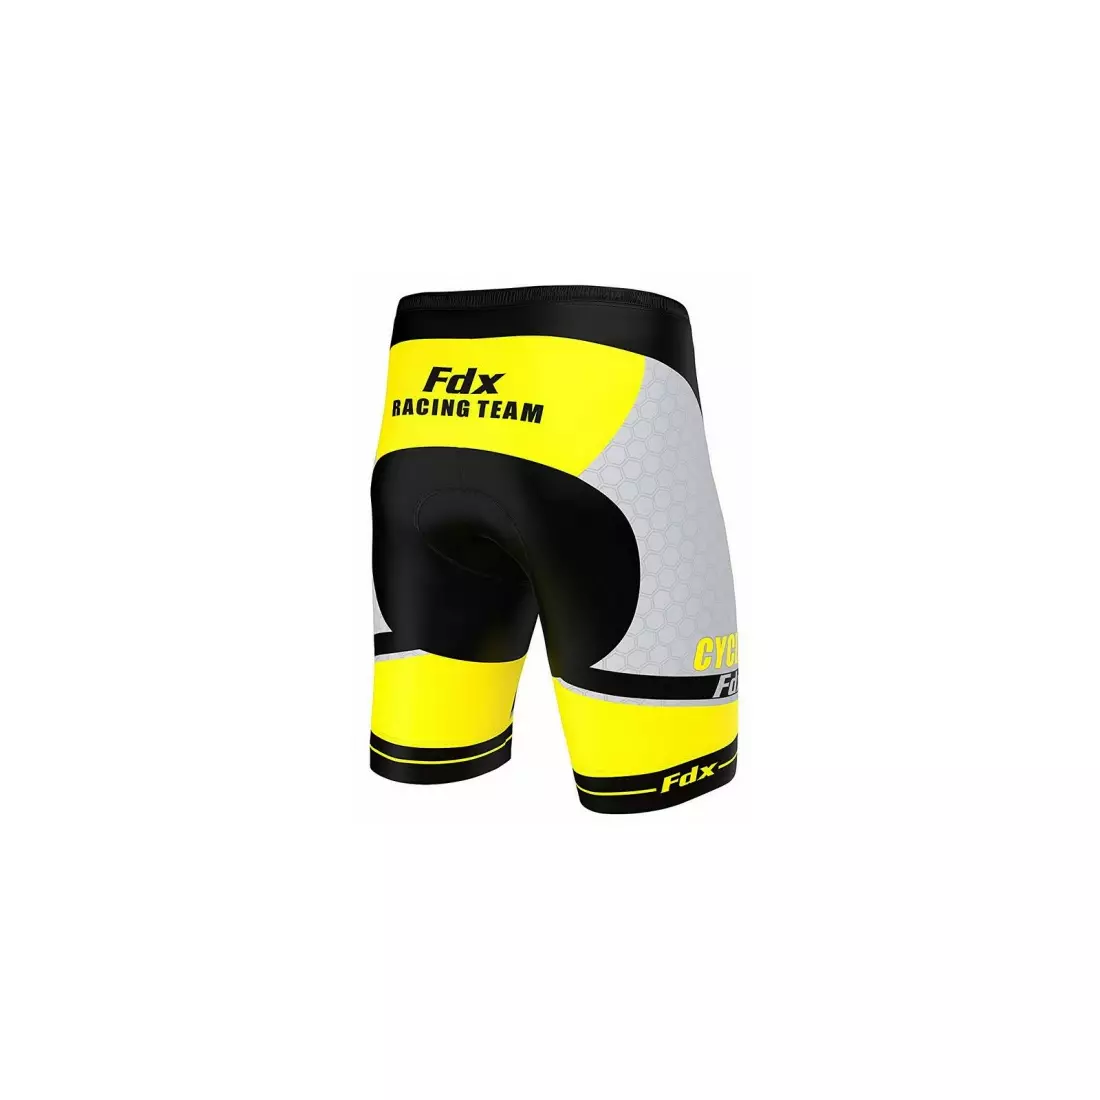 FDX 1070 men's cycling shorts, black / yellow